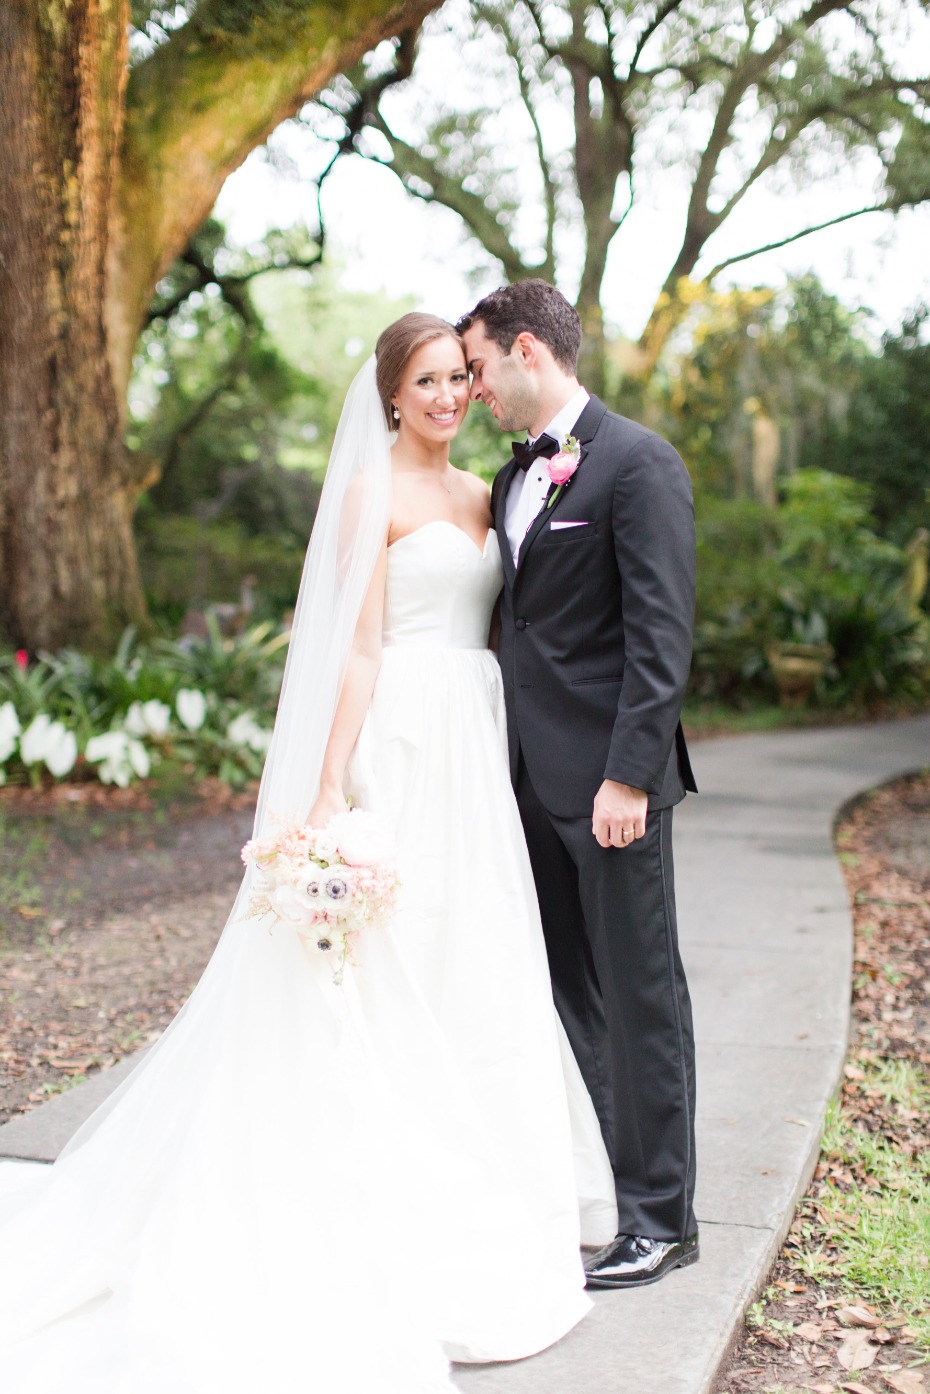 Bridgette and Austin's New Orleans wedding